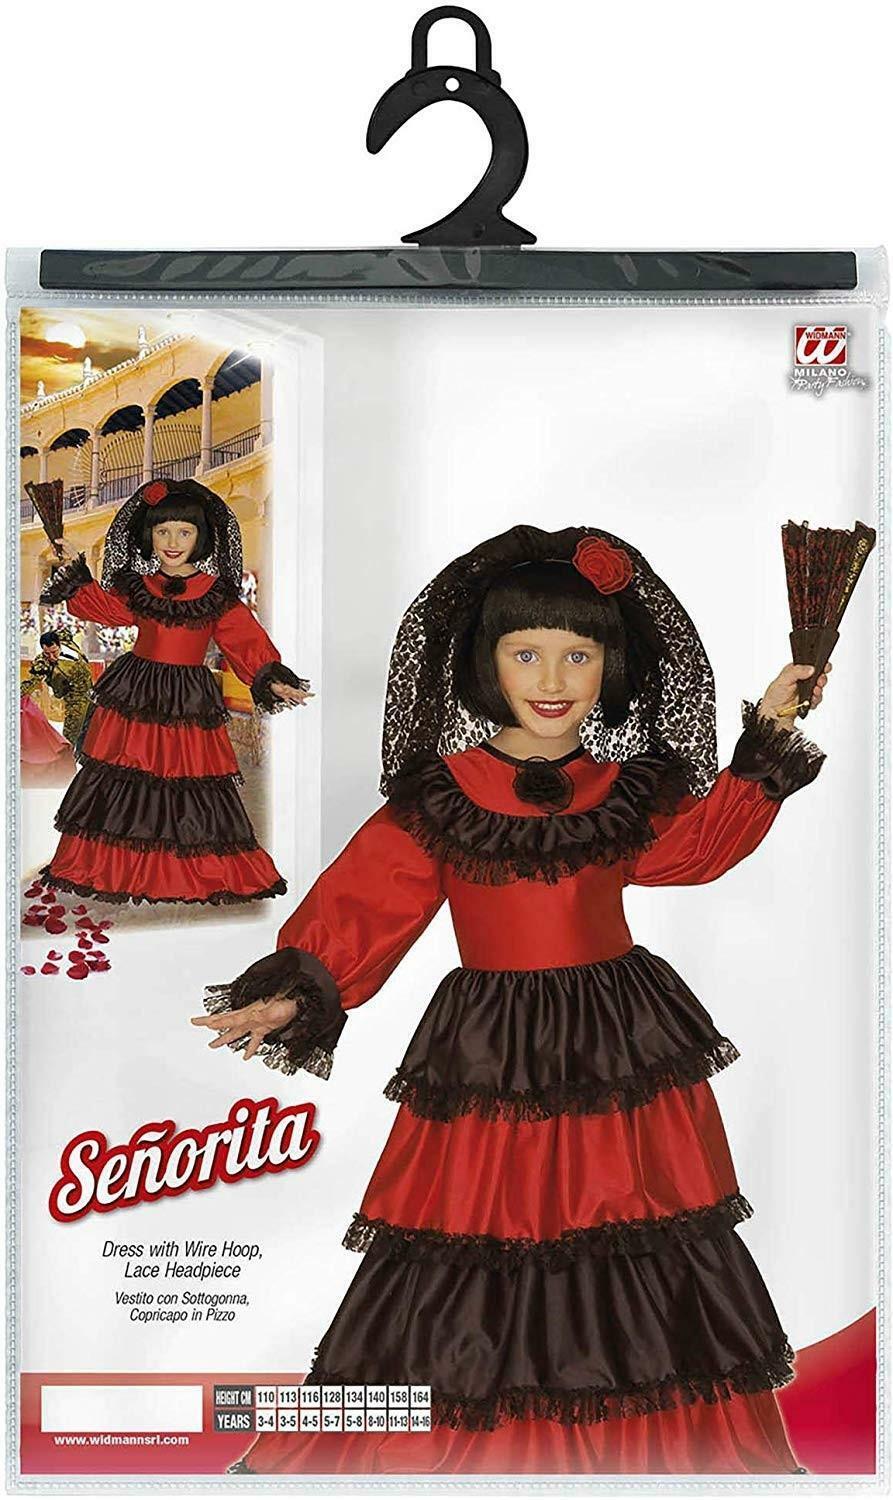 widmann costume spagnola taglia 11/13 anni